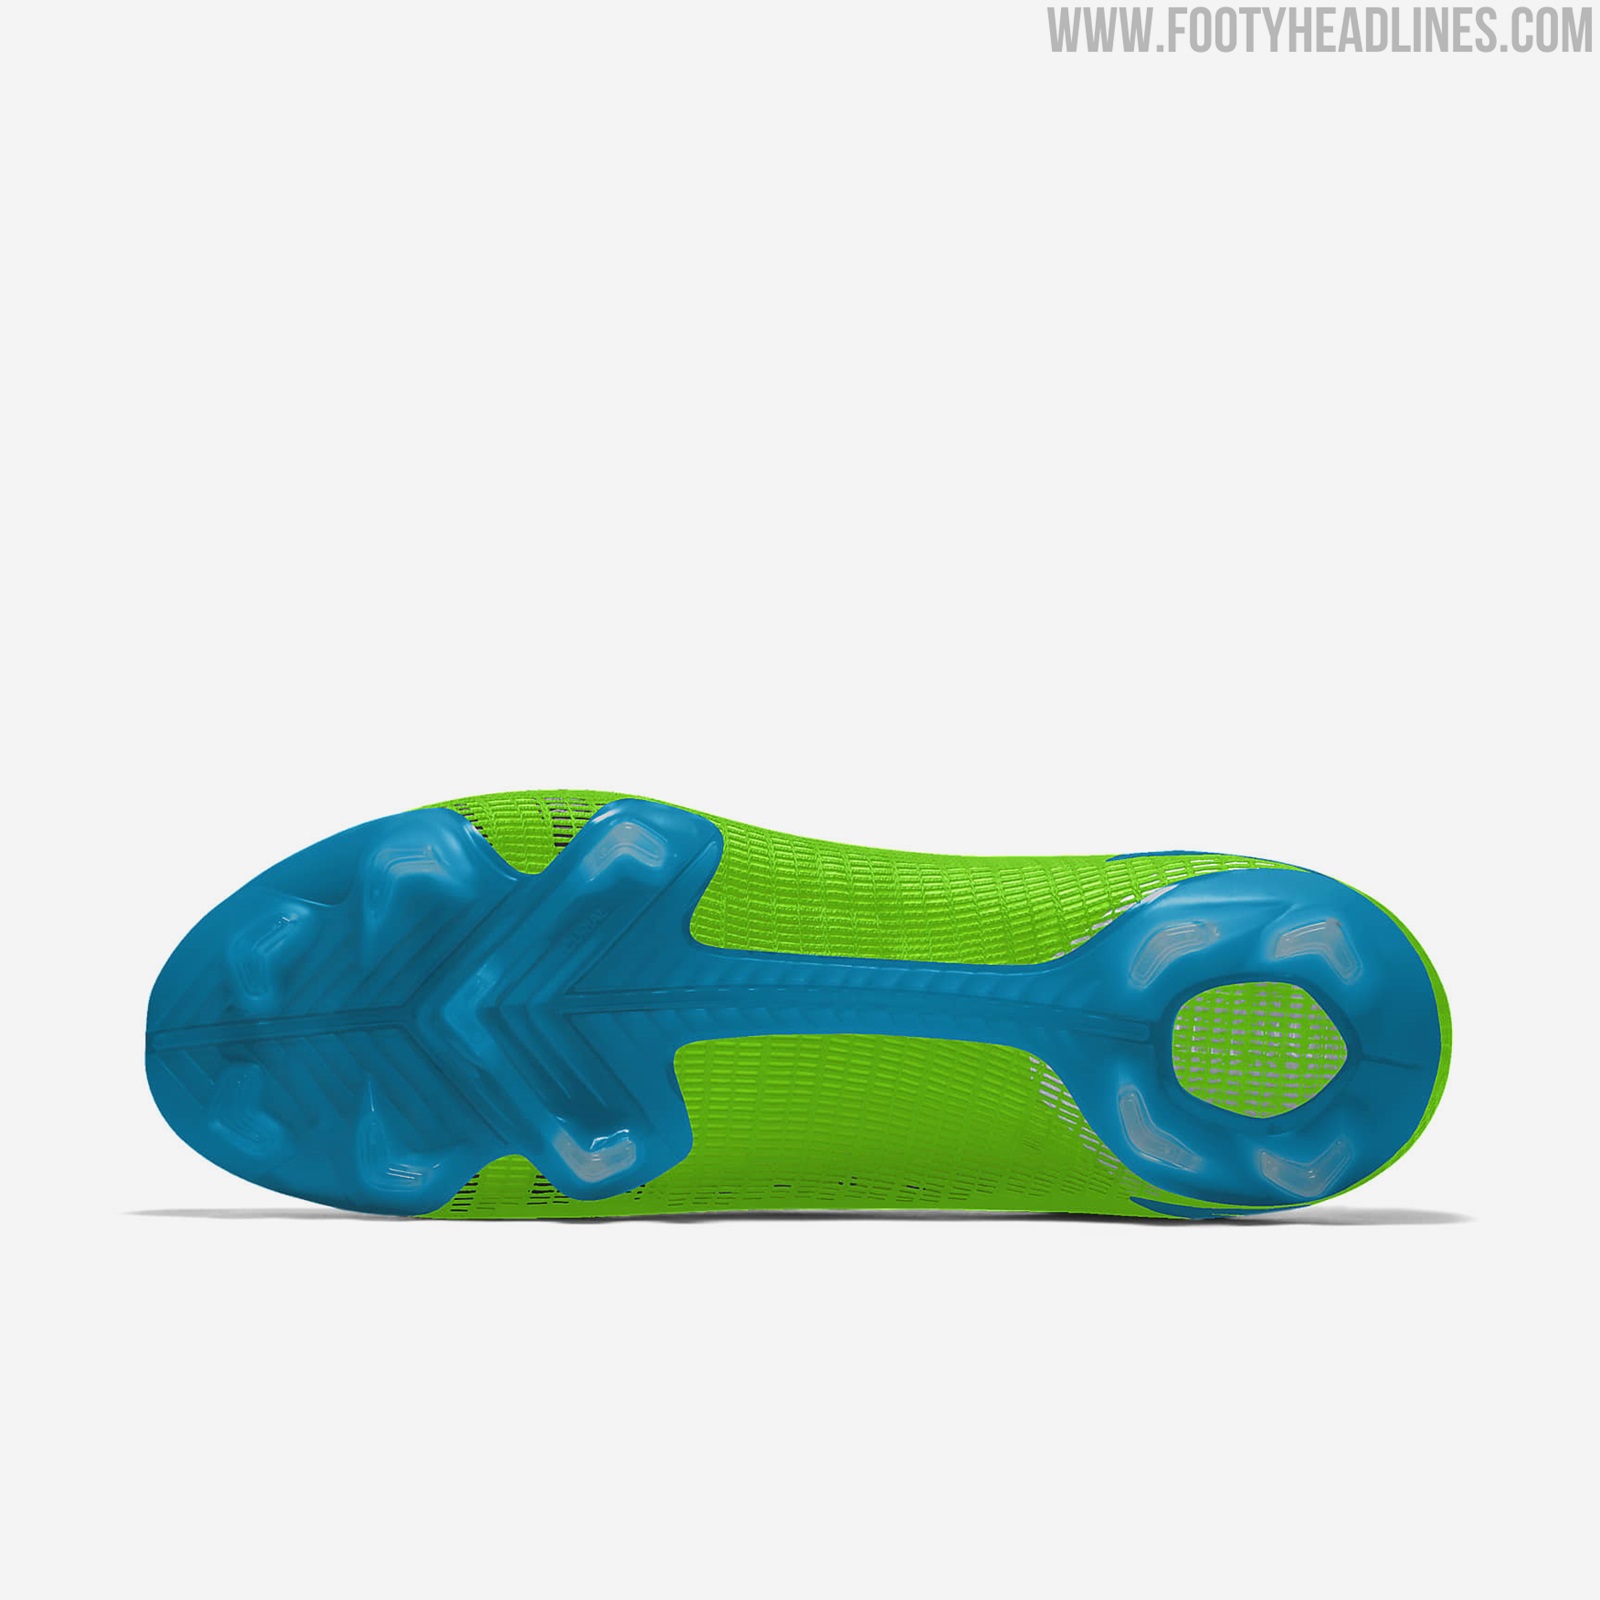 Customizable Next-Gen Nike Mercurial 2021 Boots Released - Footy